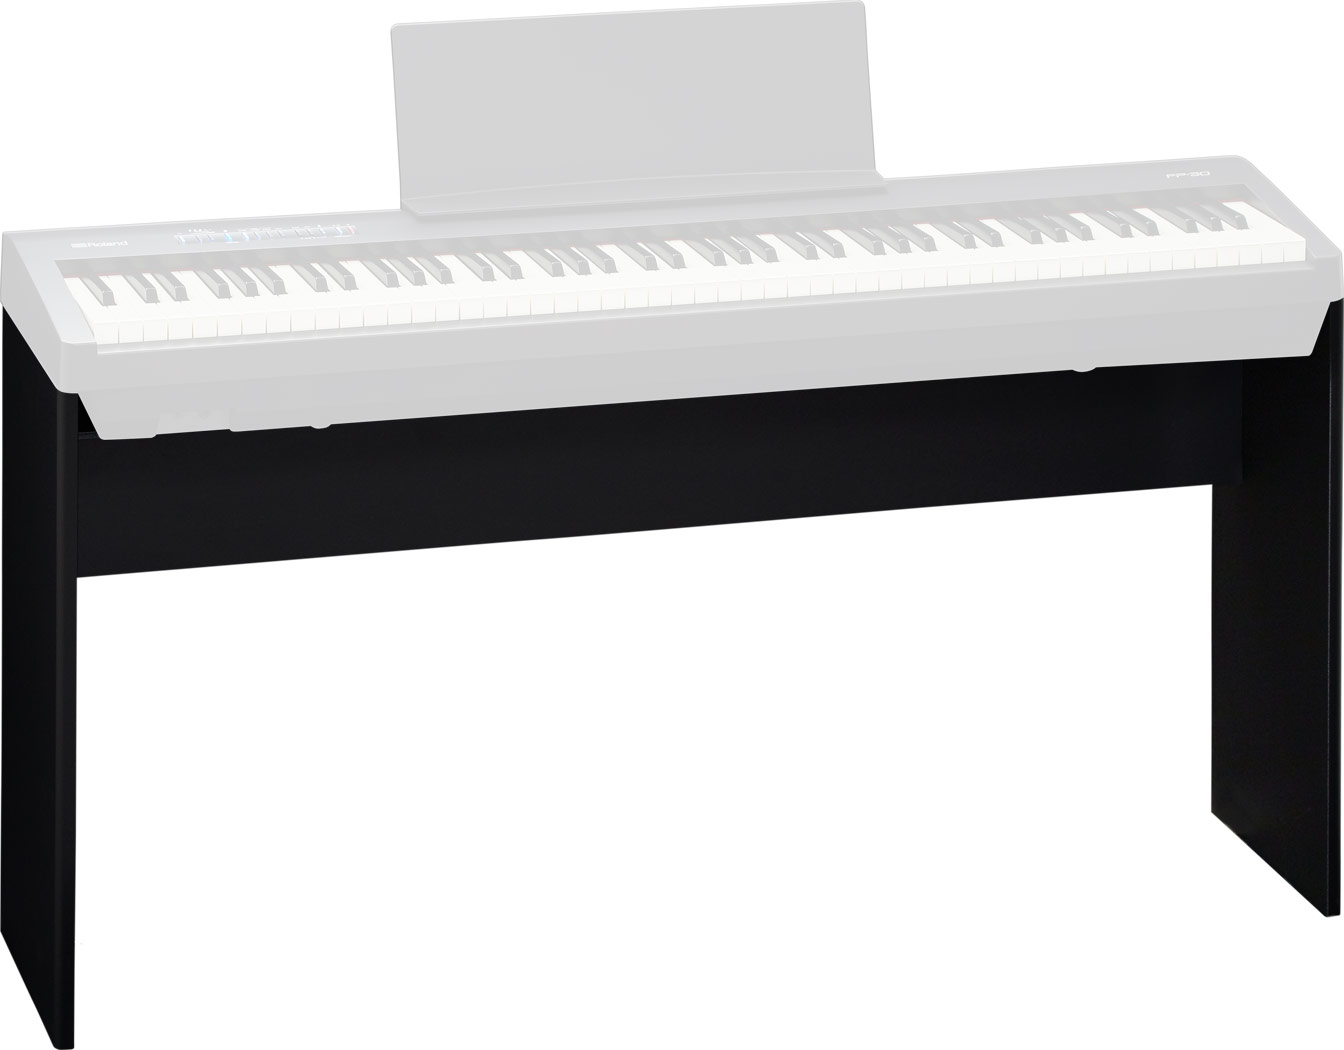 Digital Piano Stand for FP-30-Black (KSC-70-BK)